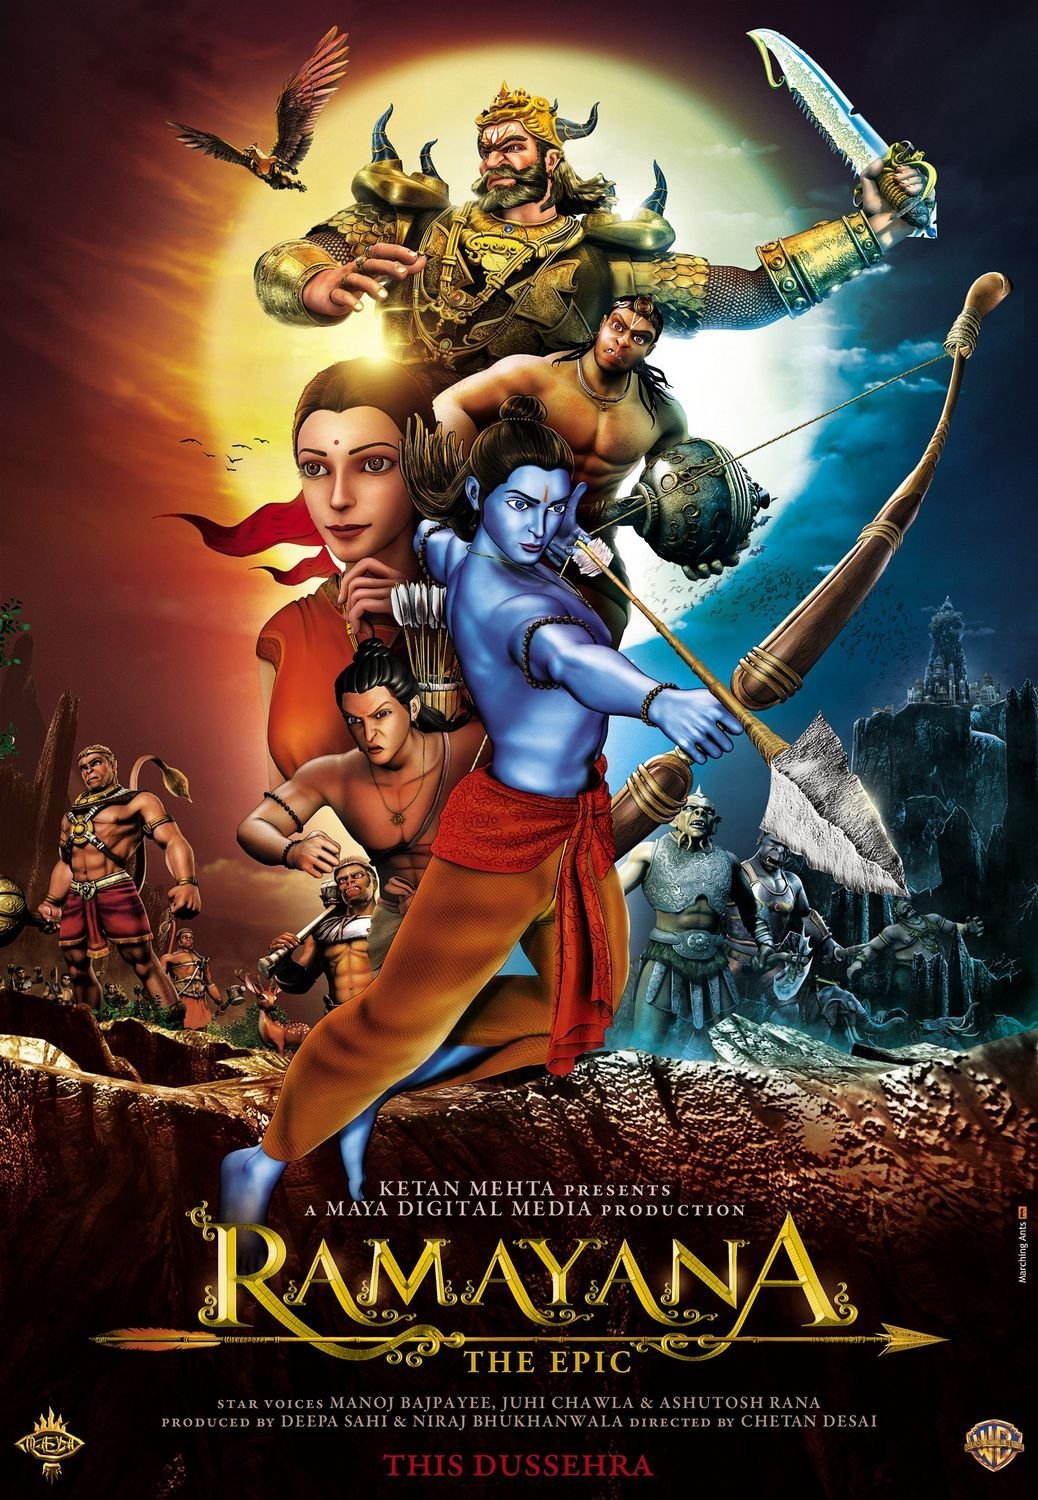 Ramayana The Epic 2010 - HD Wallpaper 